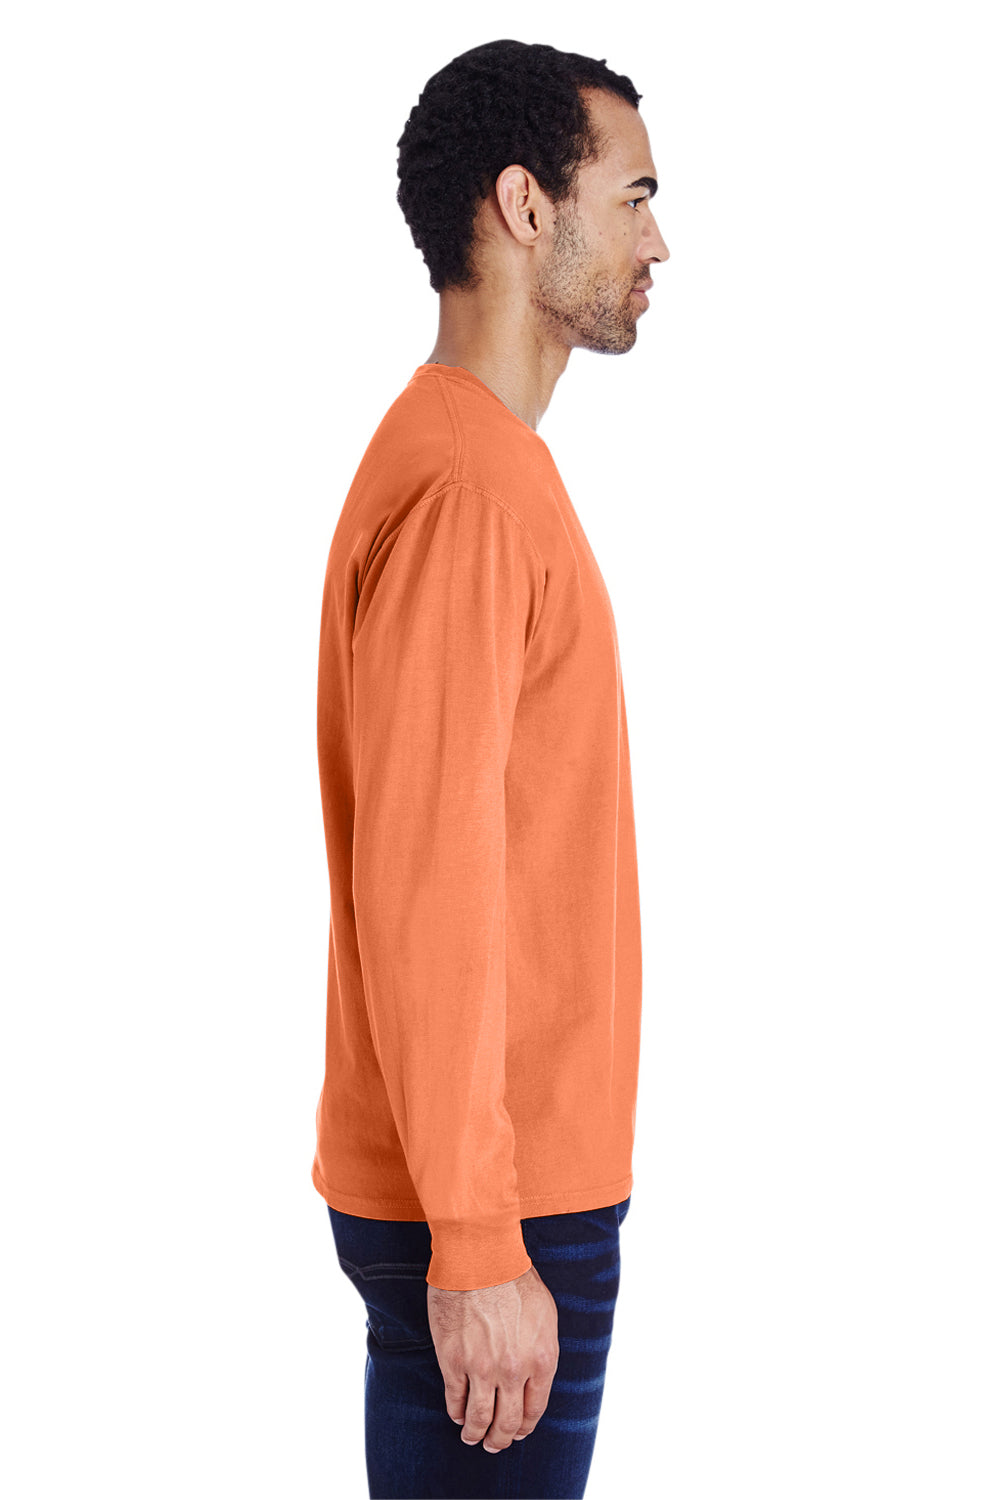 ComfortWash by Hanes GDH250 Long Sleeve Crewneck T-Shirt w/ Pocket Horizon Orange Side